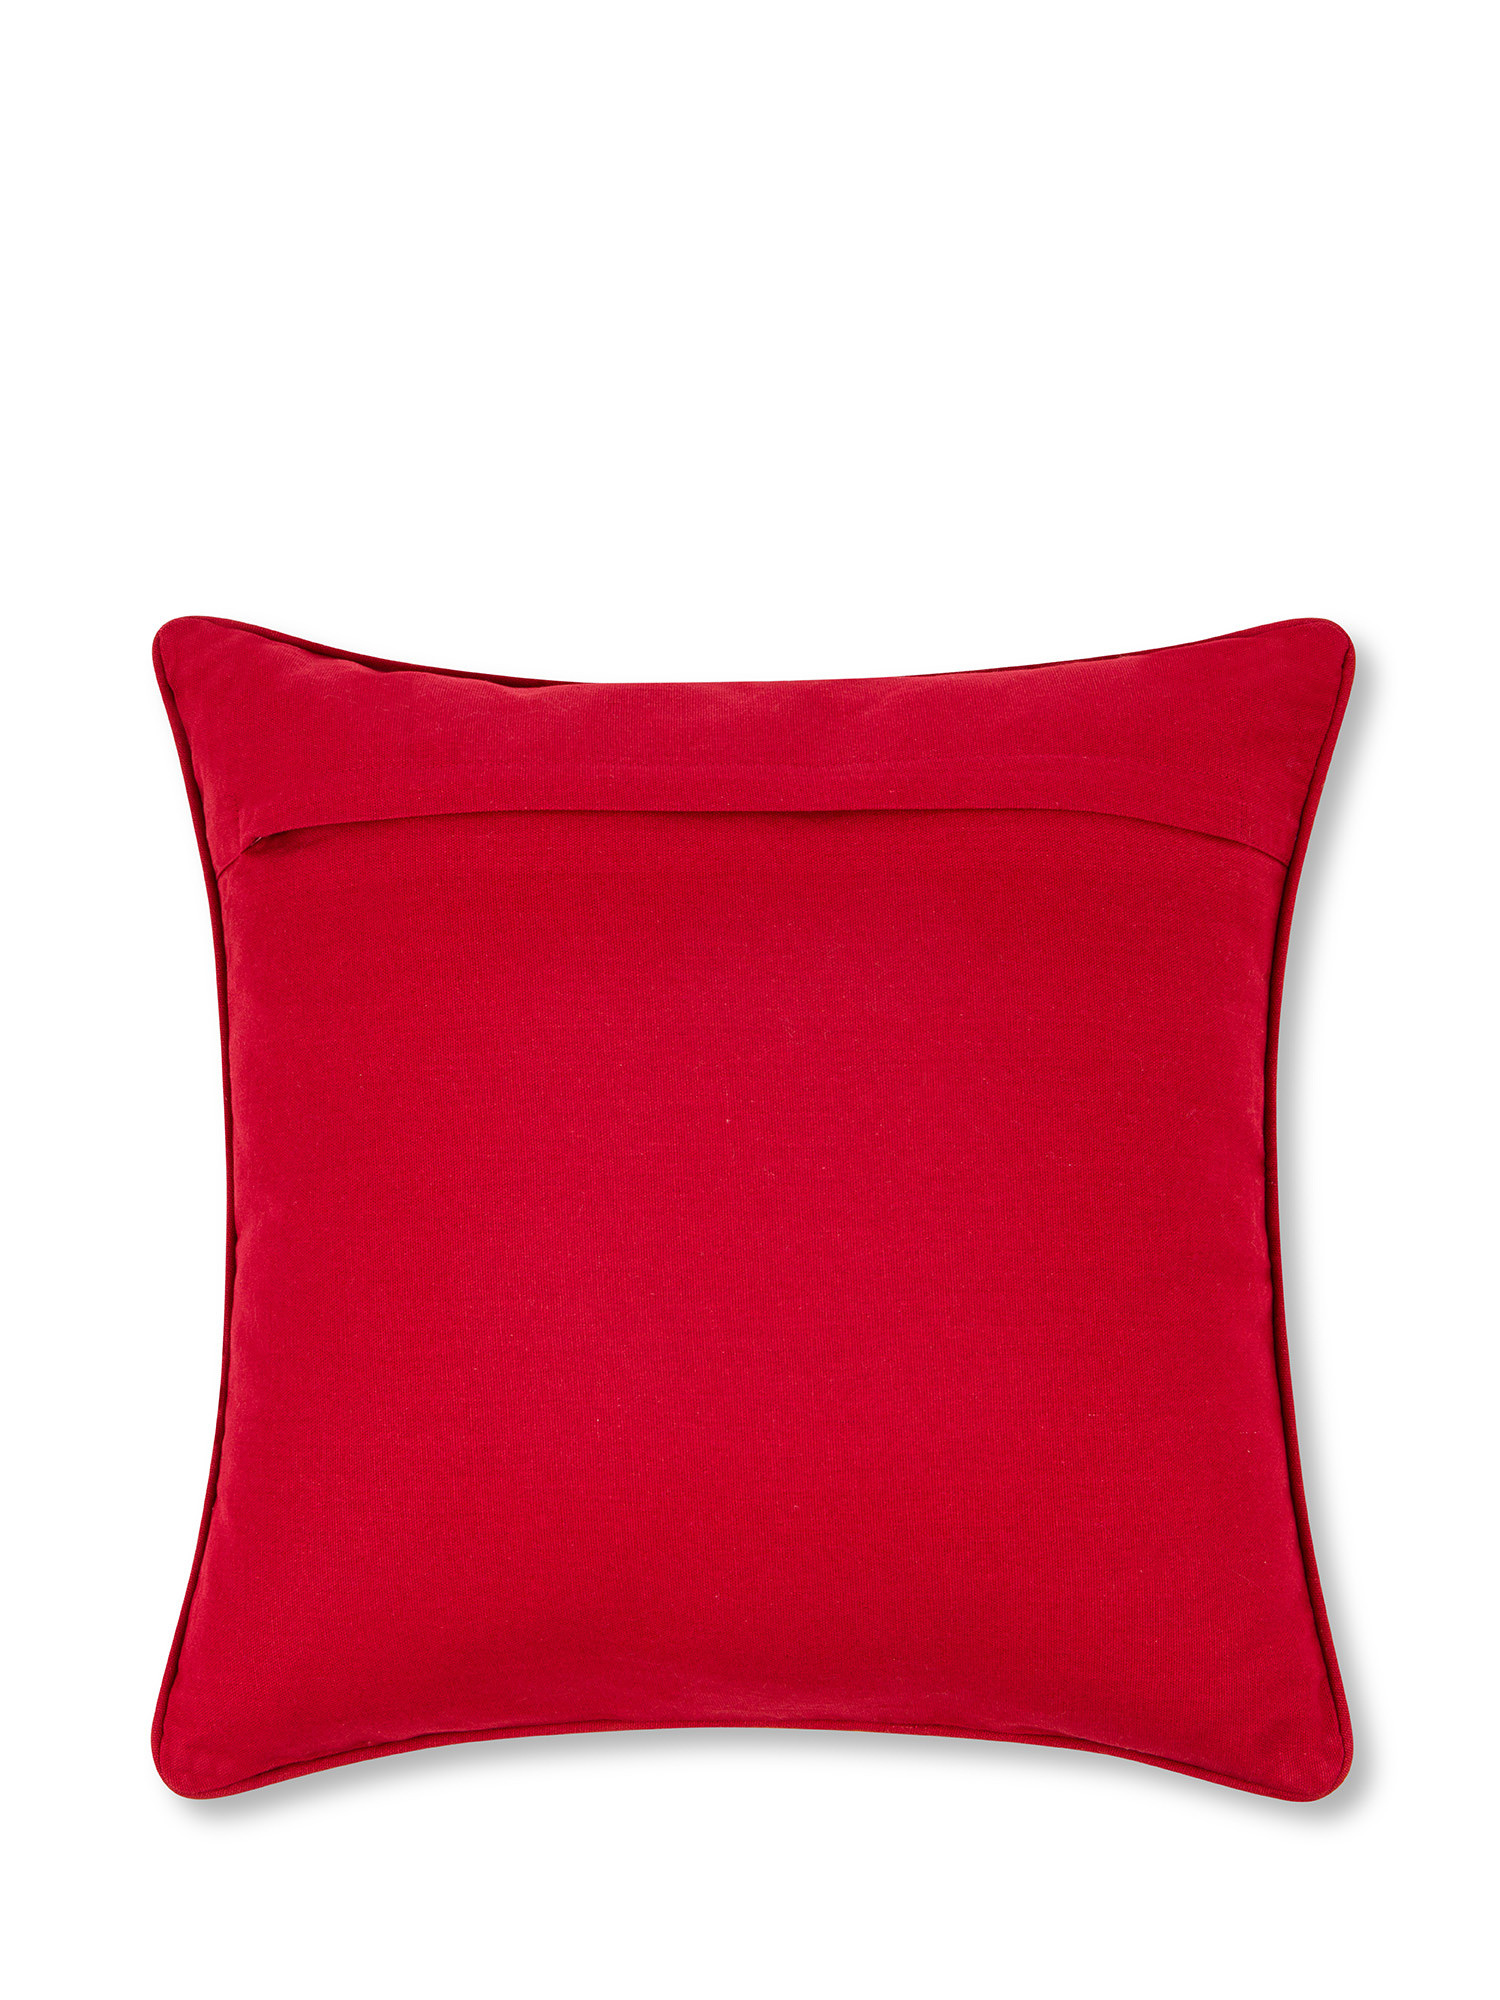 Cuscino tessuto tartan ricamato 45x45cm, Rosso, large image number 2